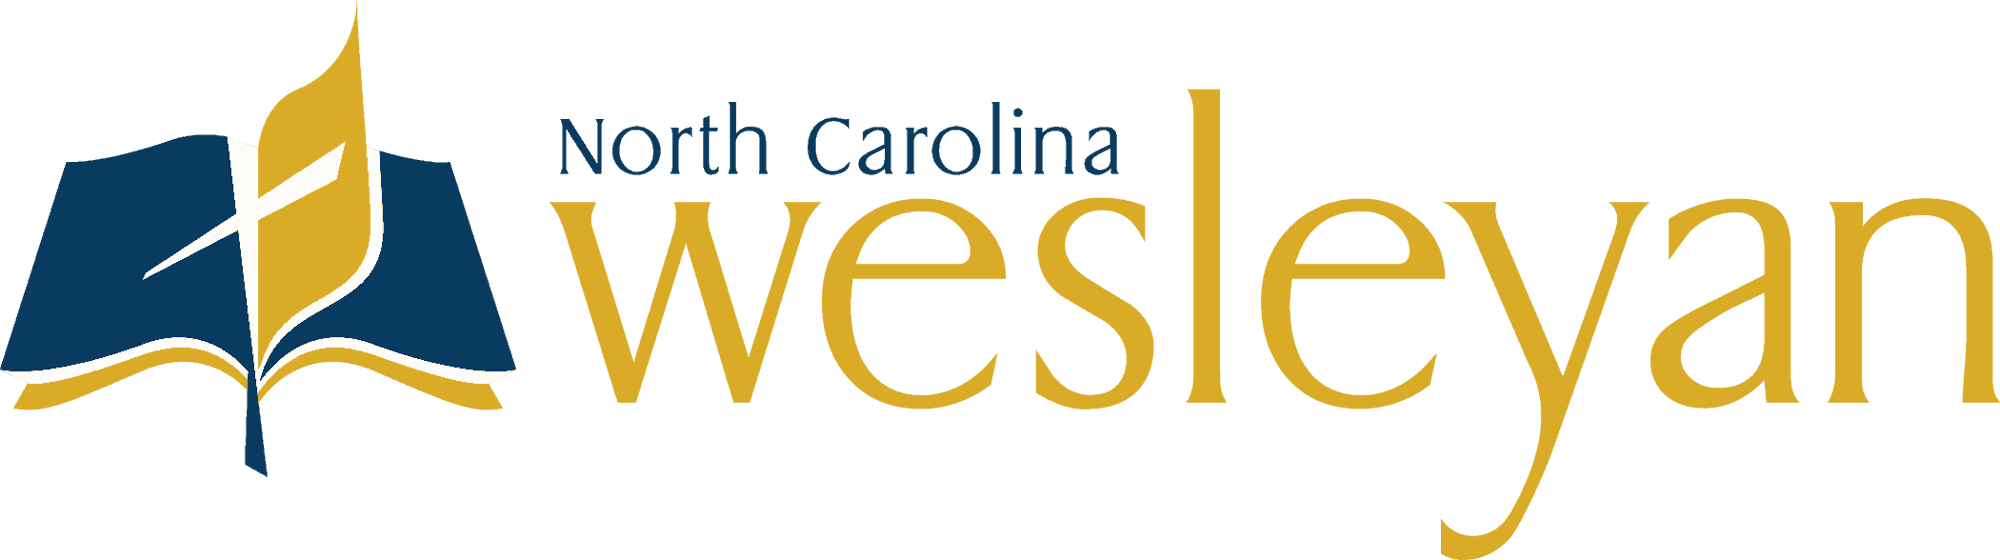 NC Wesleyan Logo